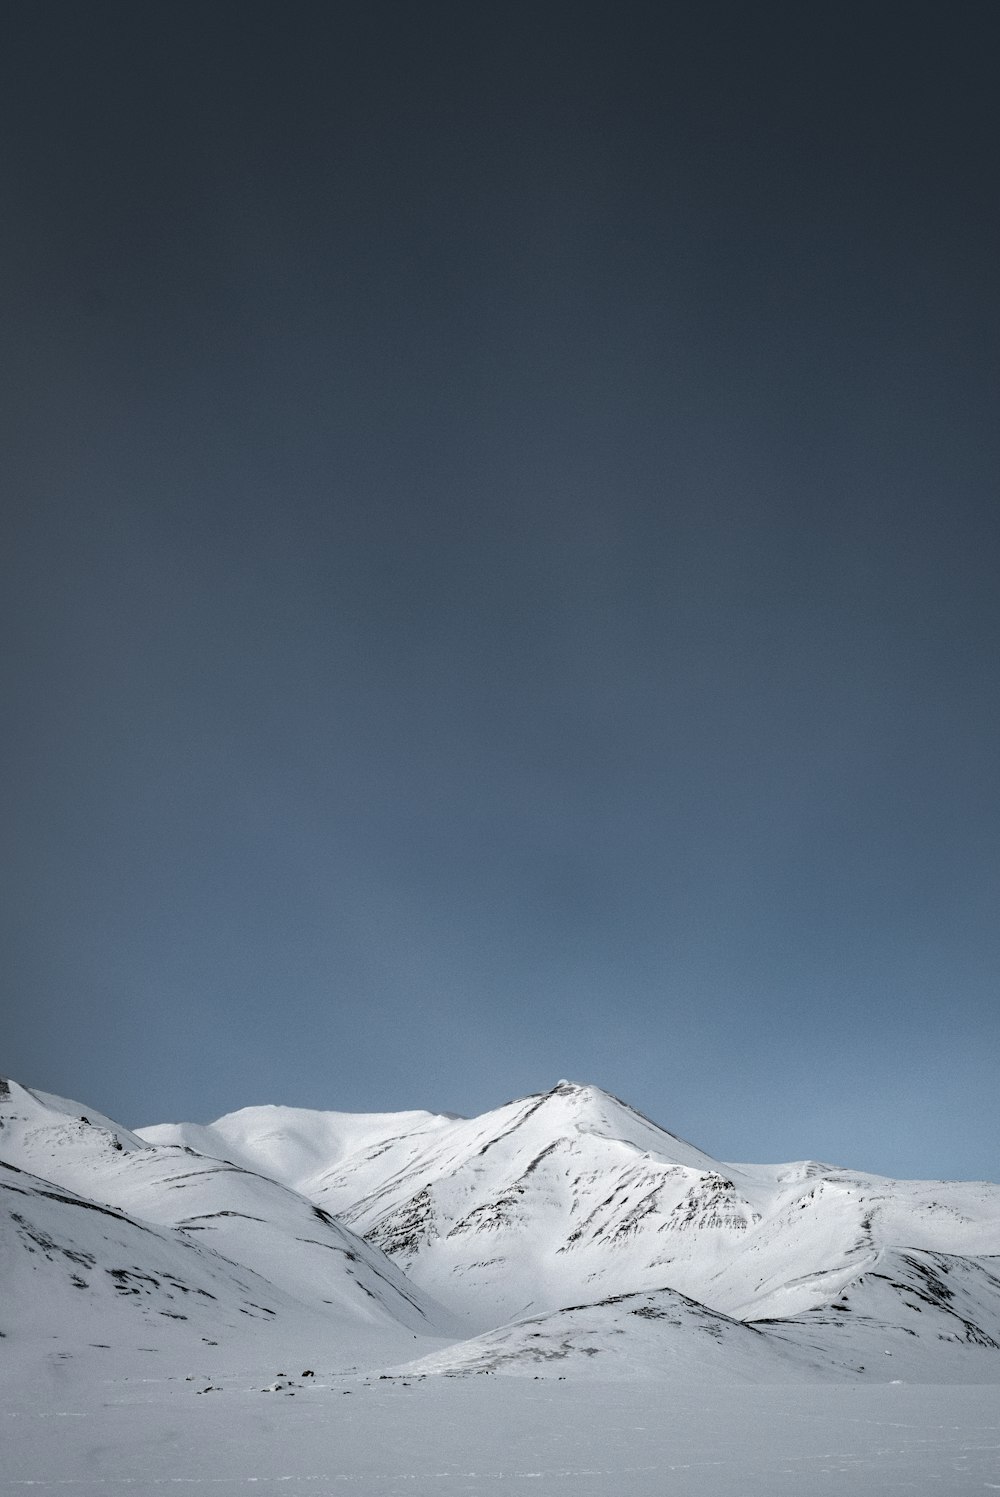 a snowy mountain with a blue sky